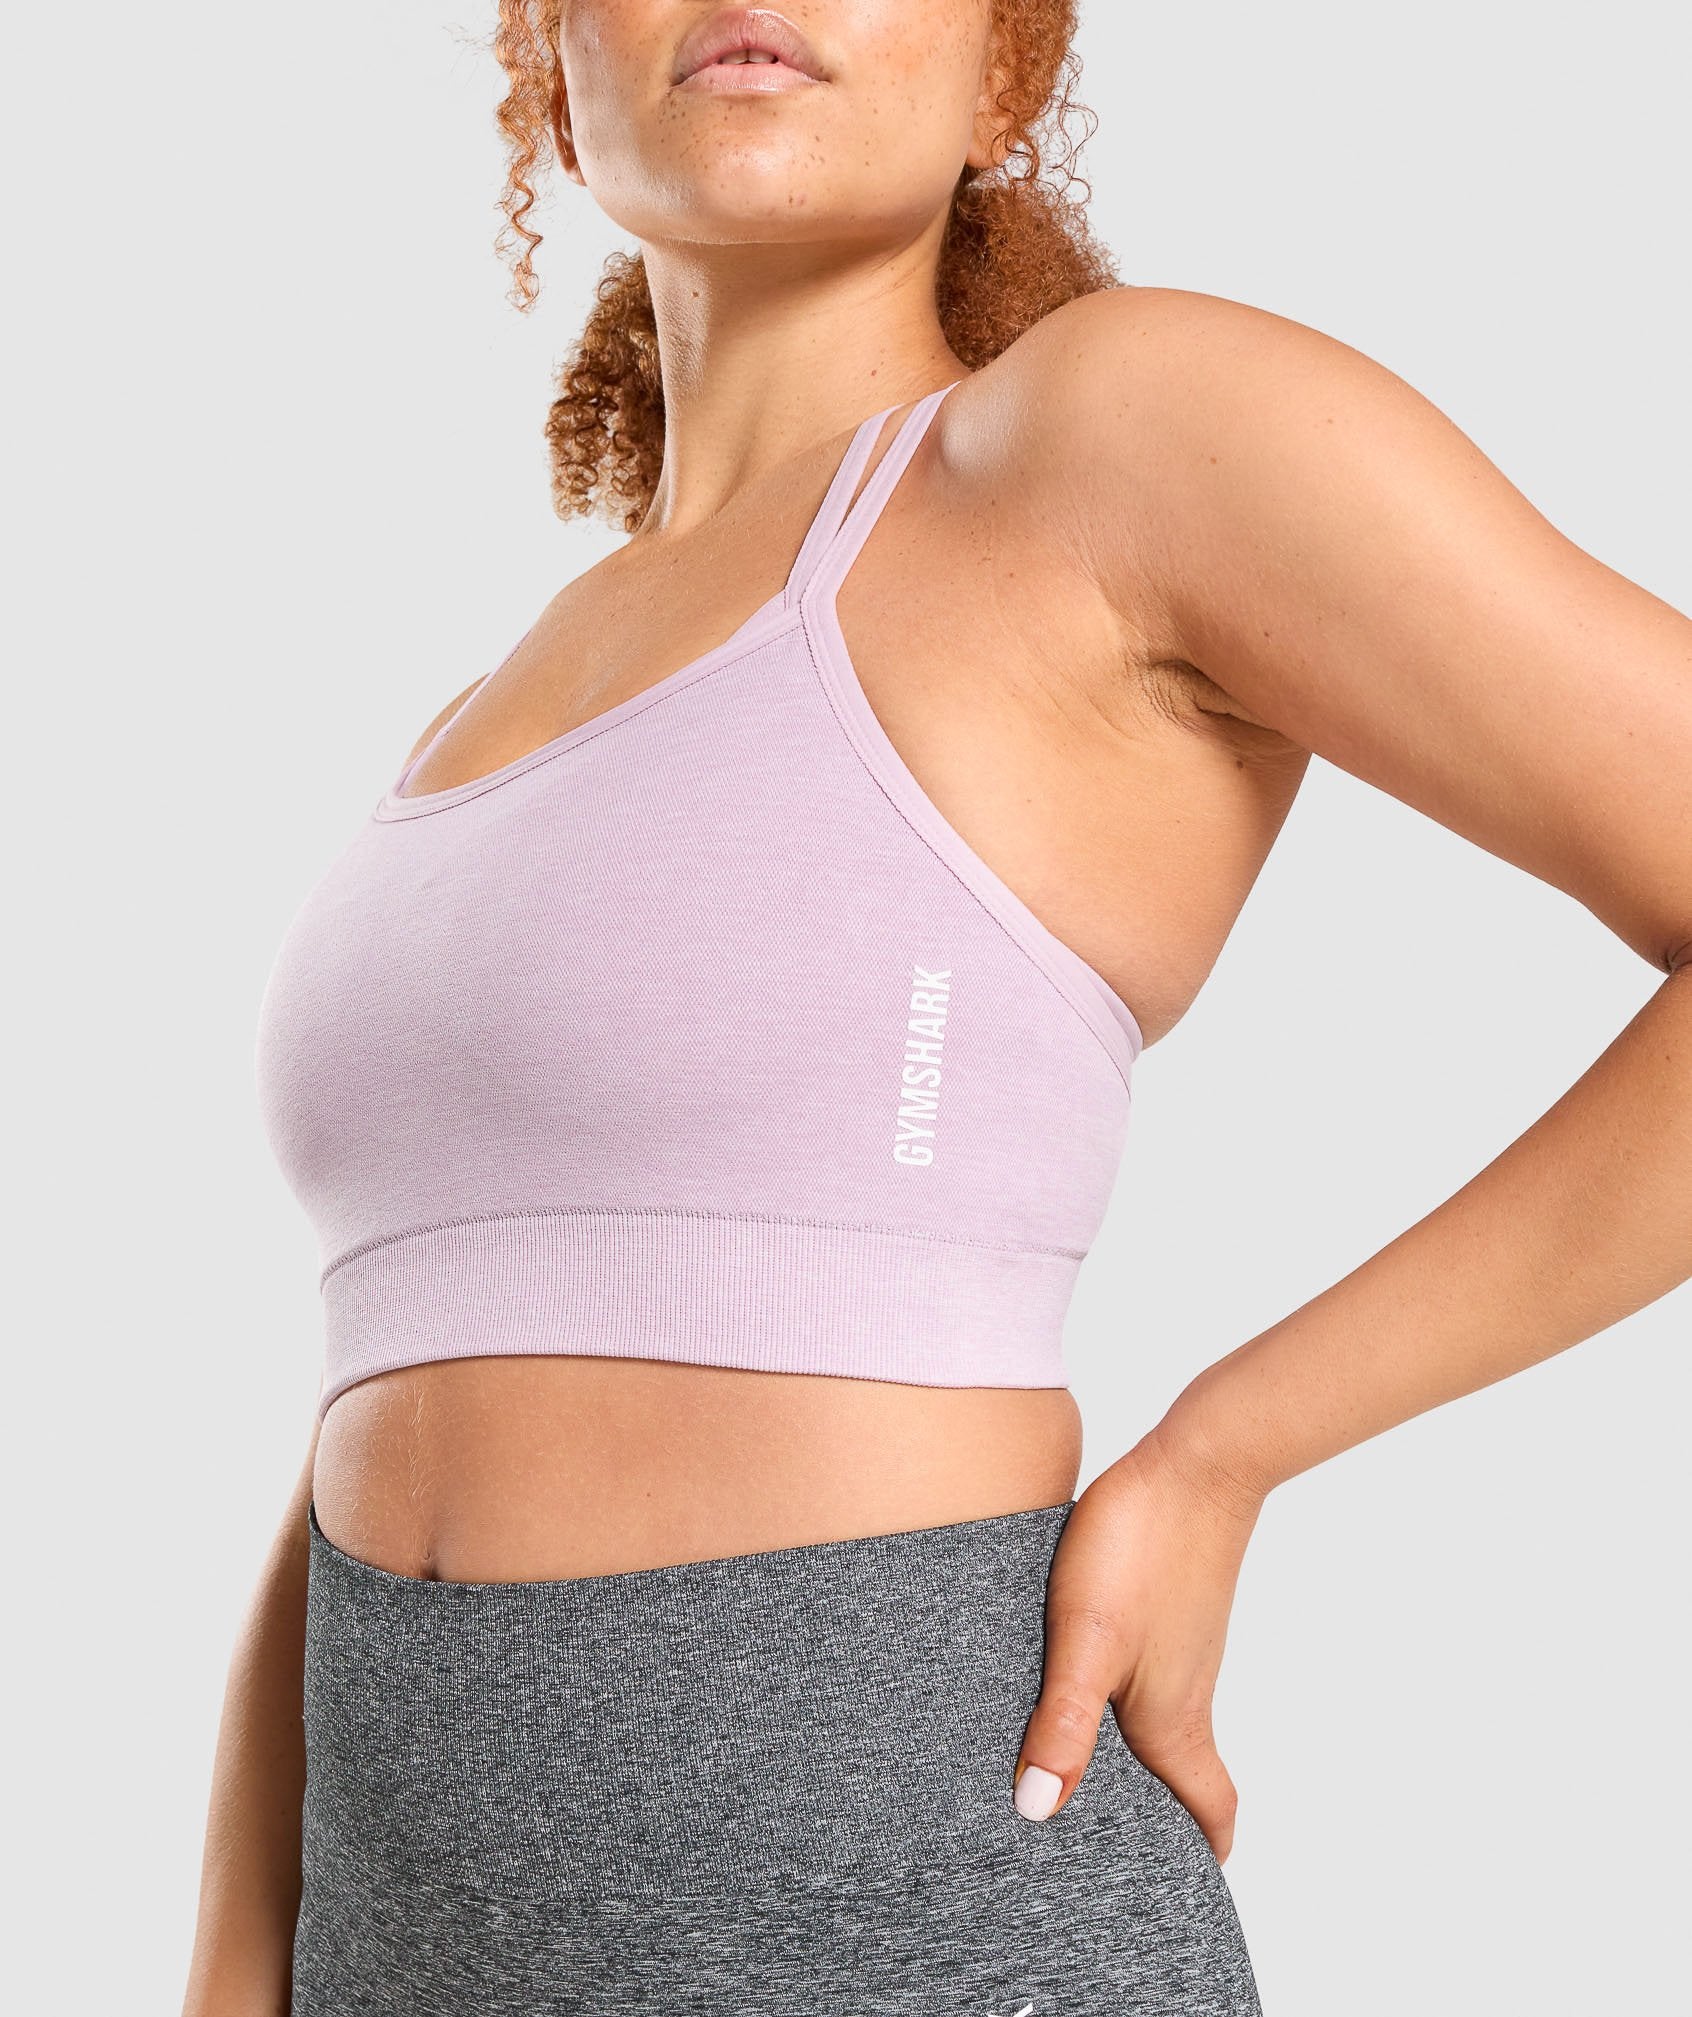 GAP Woman's Grey Marl Sports bra with double straps